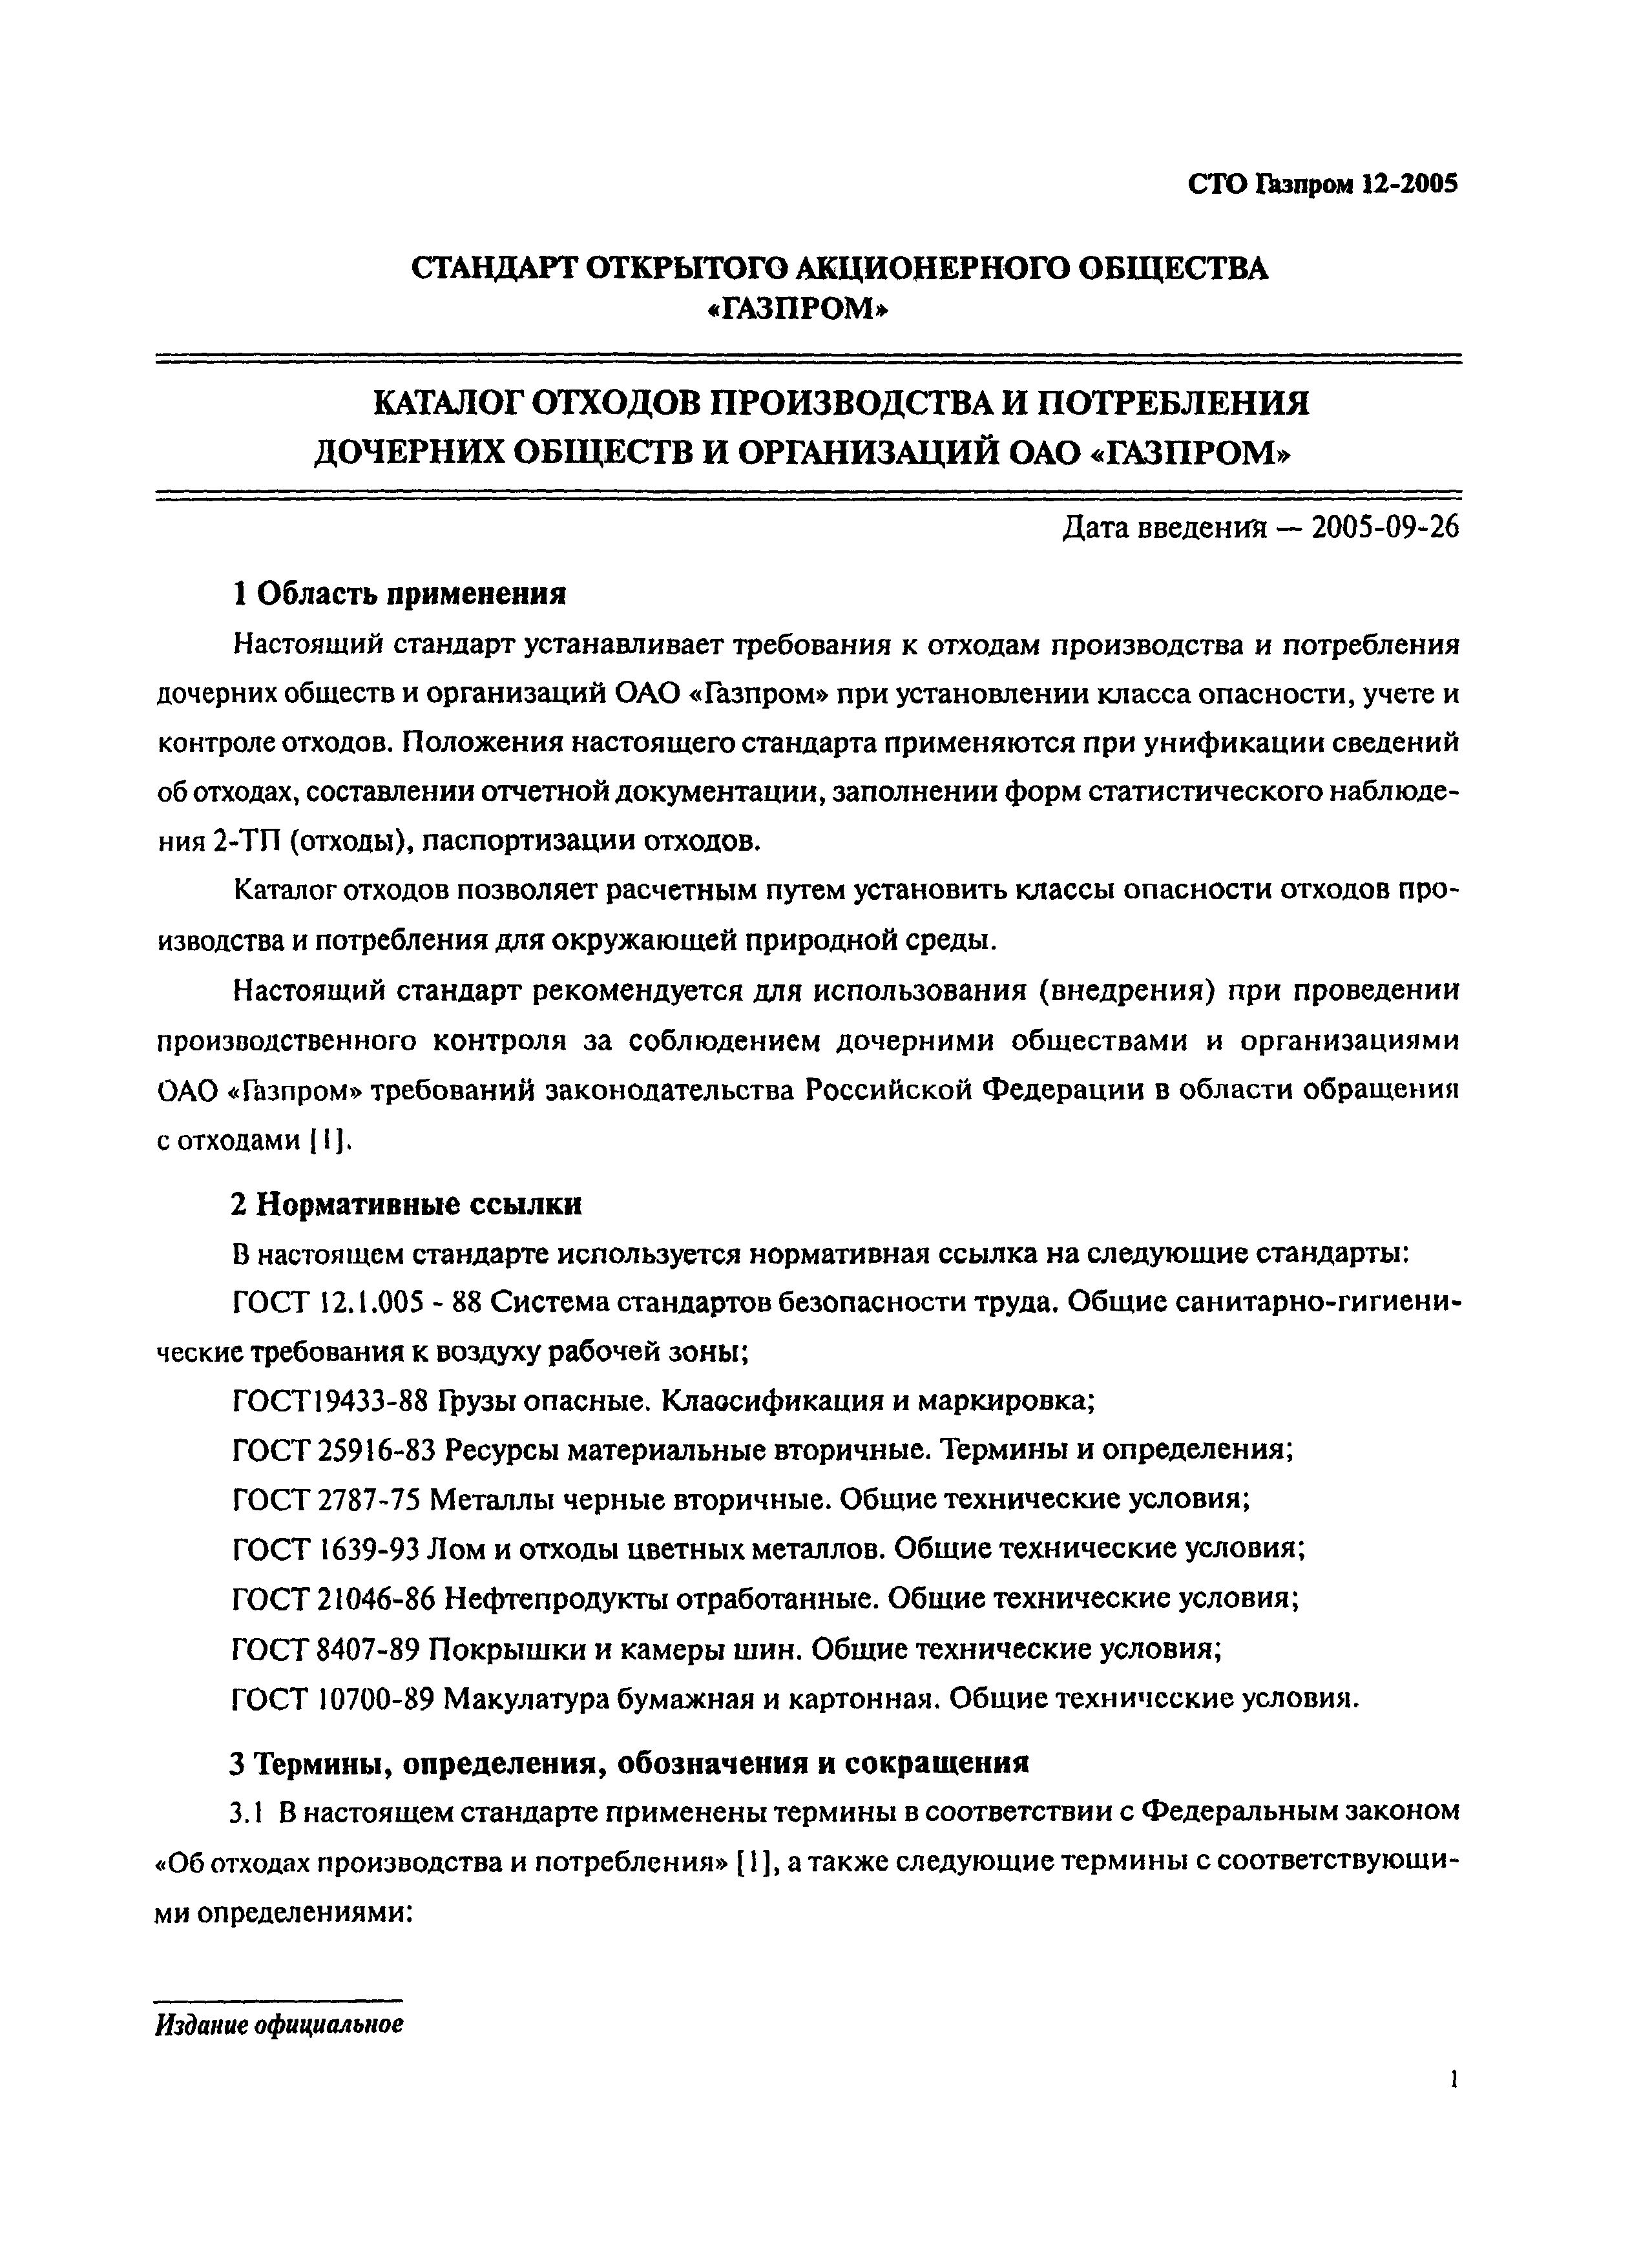 СТО Газпром 12-2005